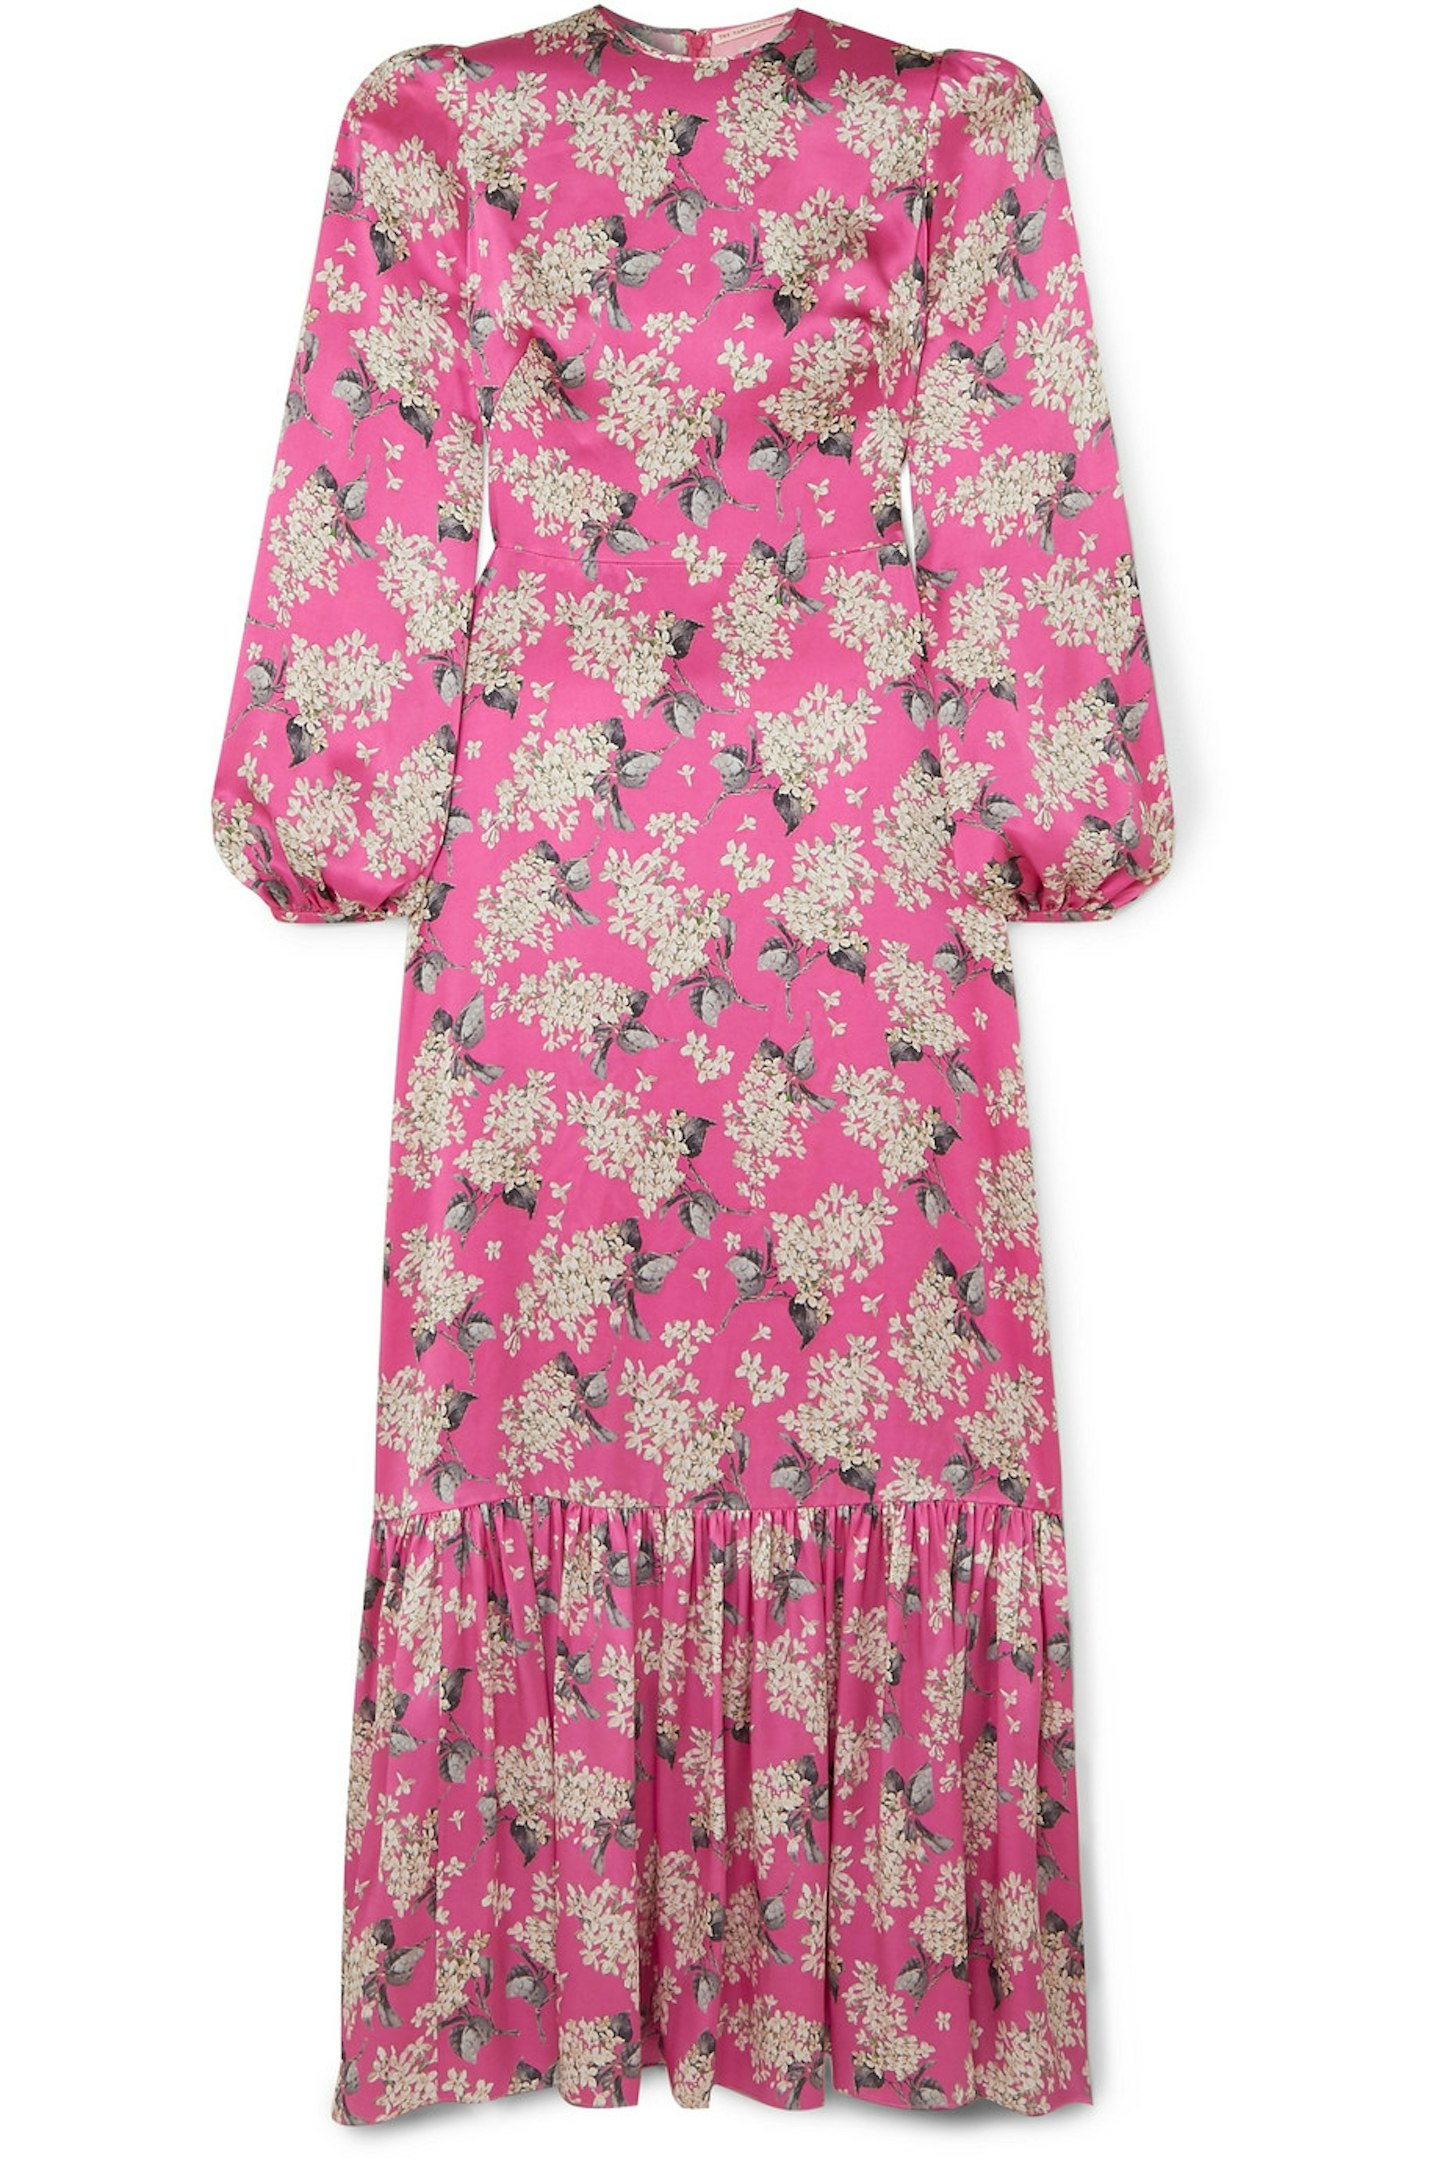 Fuchsia Floral Dress, £995